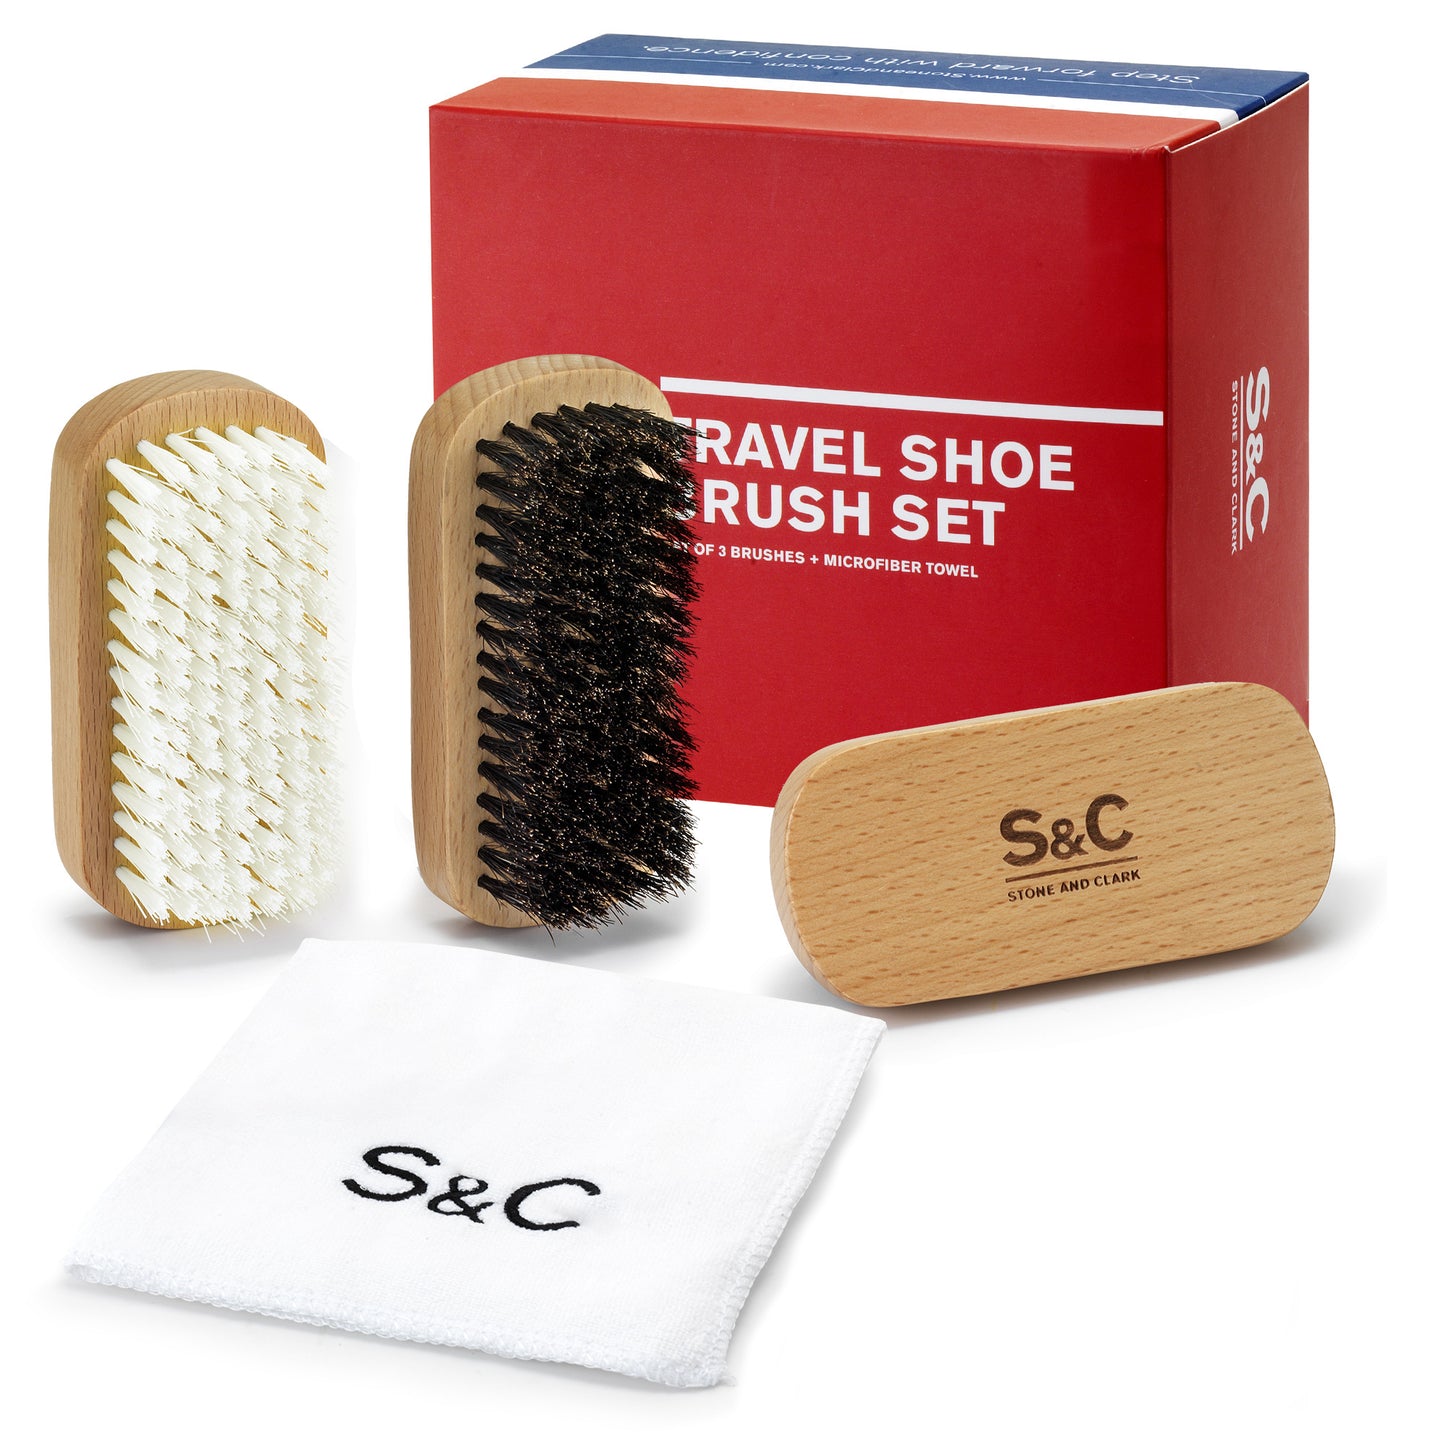 Comprehensive Travel Shoe Brush Kit